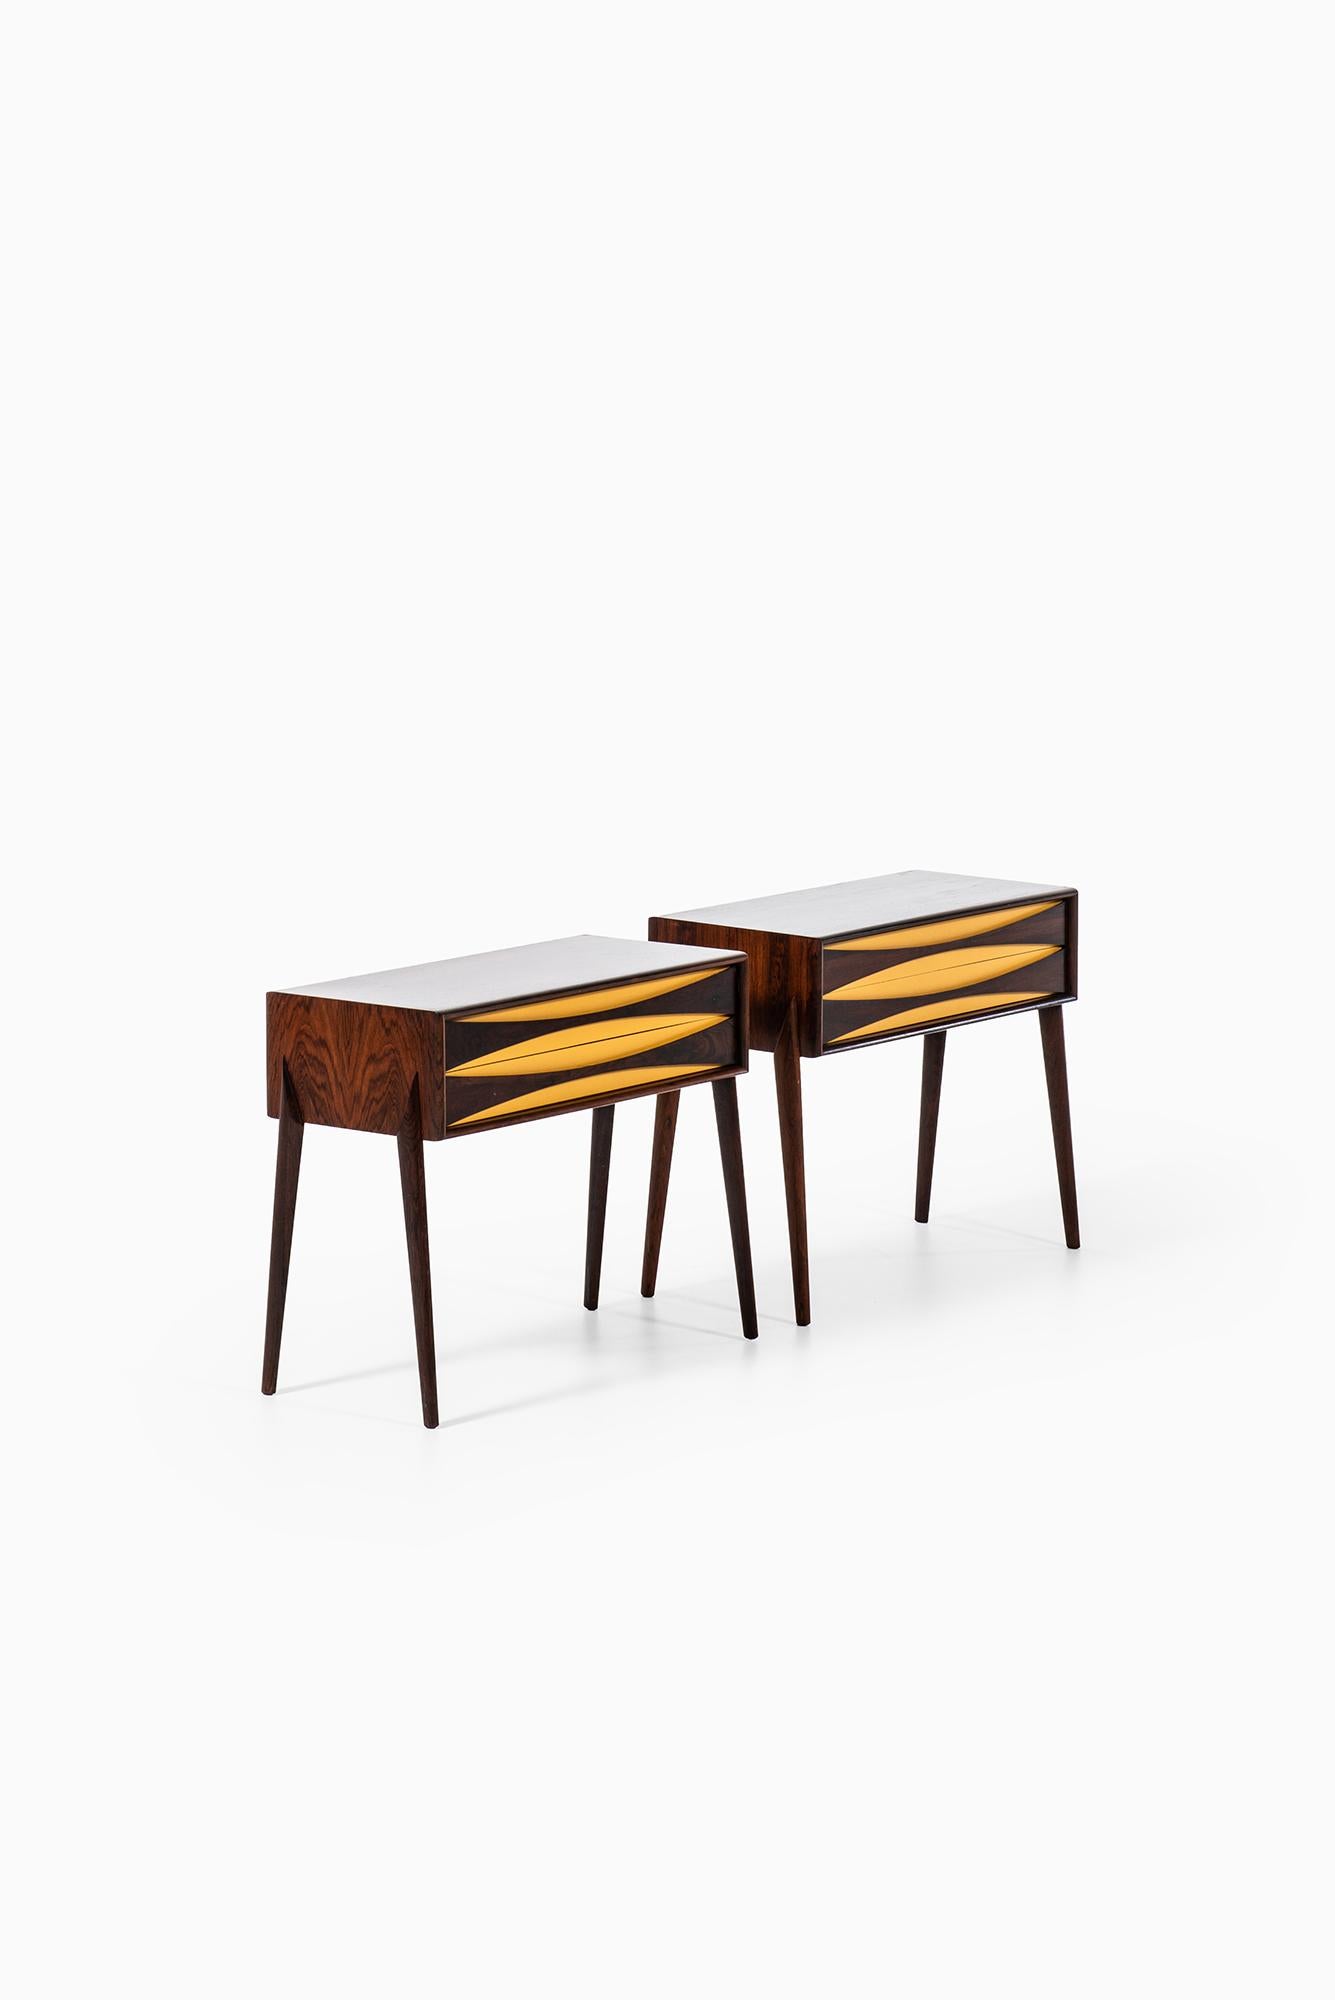 Rare pair of side tables / bedside tables designed by Rimbert Sandholt. Produced by Glas & Trä Hovmantorp in Sweden.